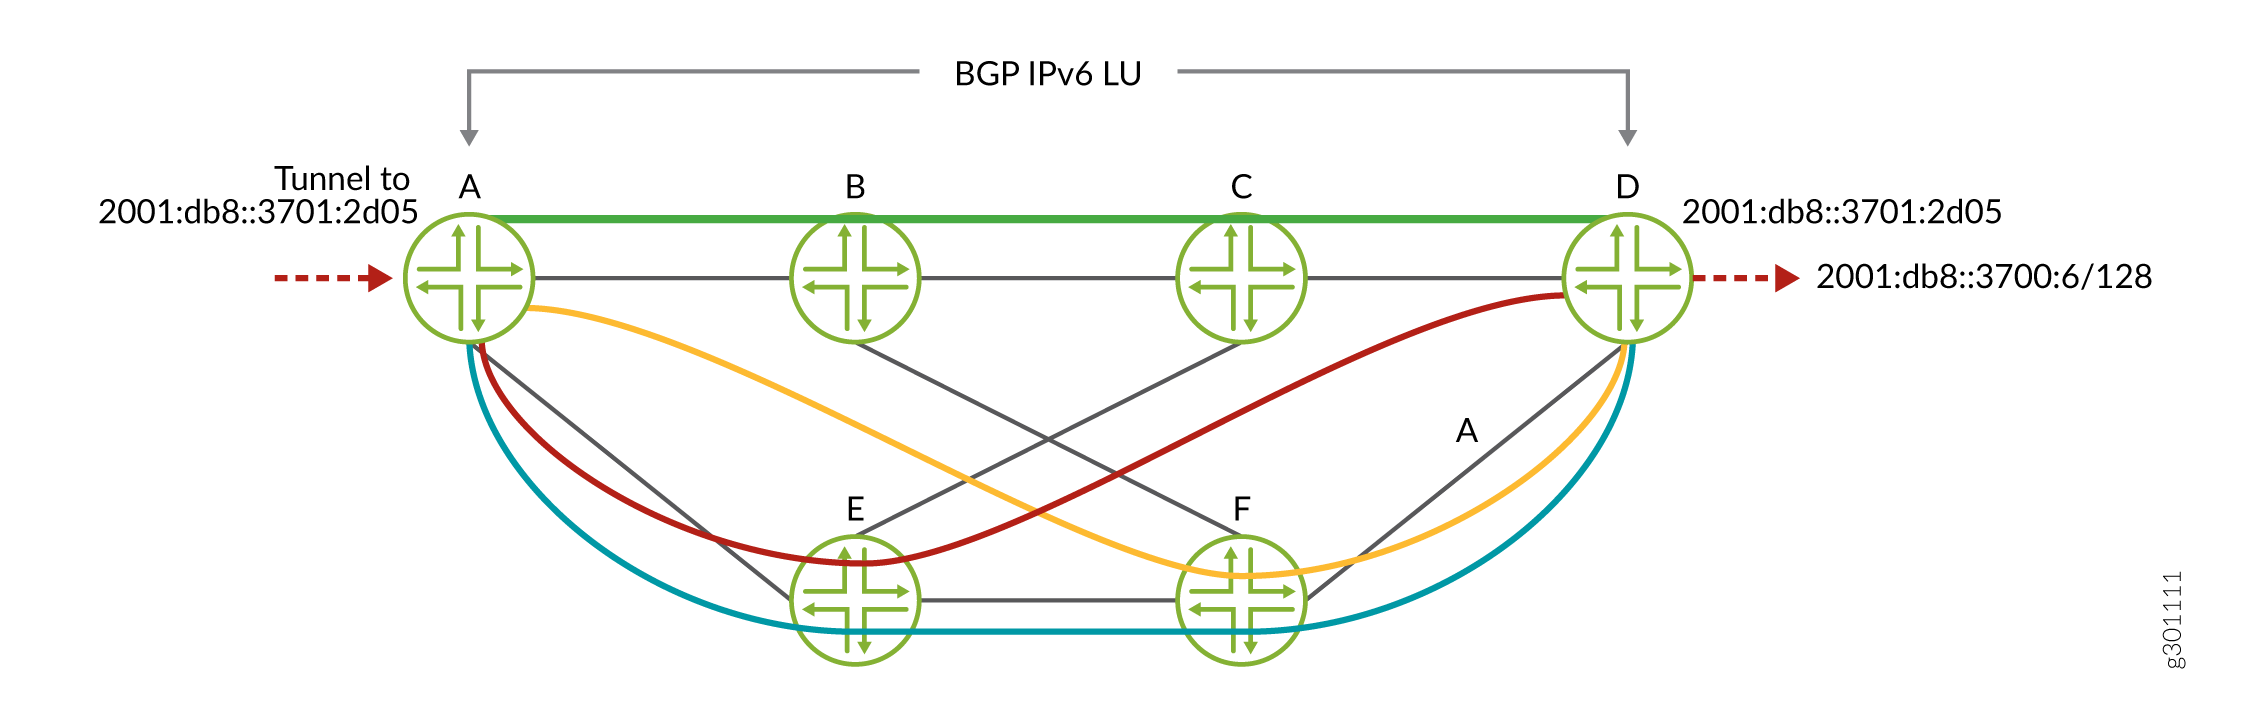 BGP IPv6 LU over colored IPv6 SR-TE